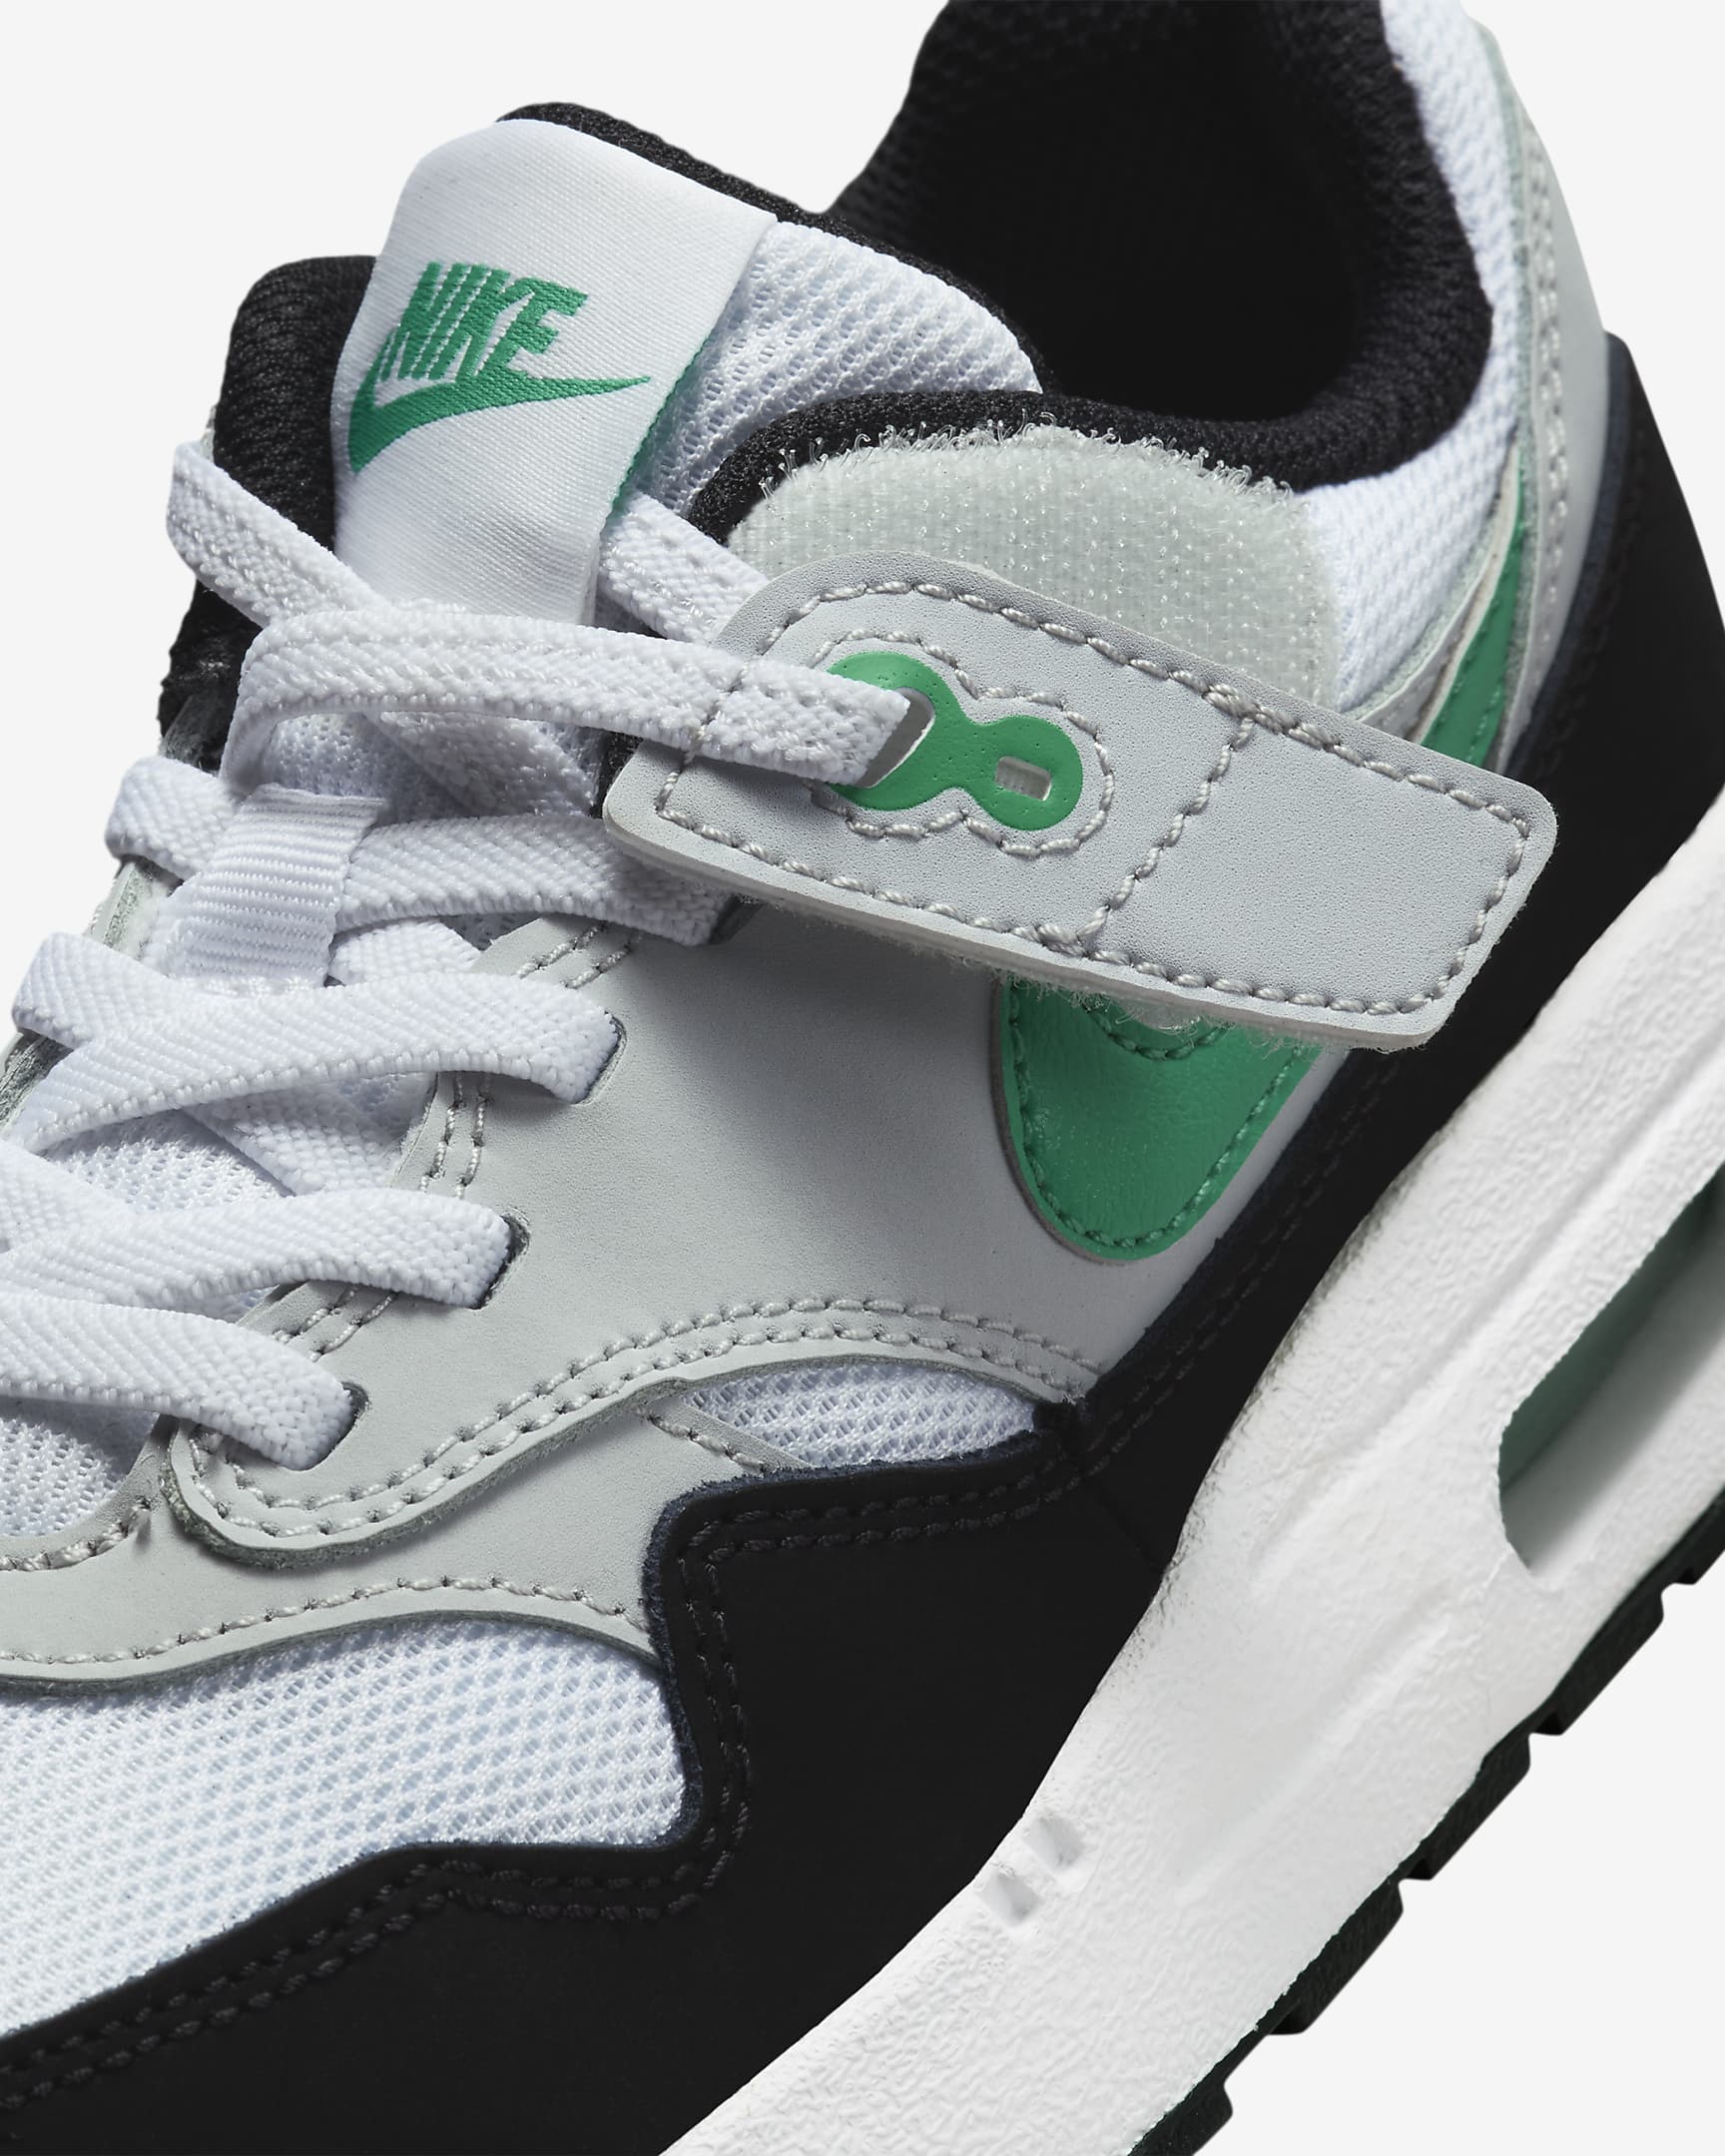 Nike Air Max 1 EasyOn Younger Kids' Shoes - White/Pure Platinum/Black/Stadium Green